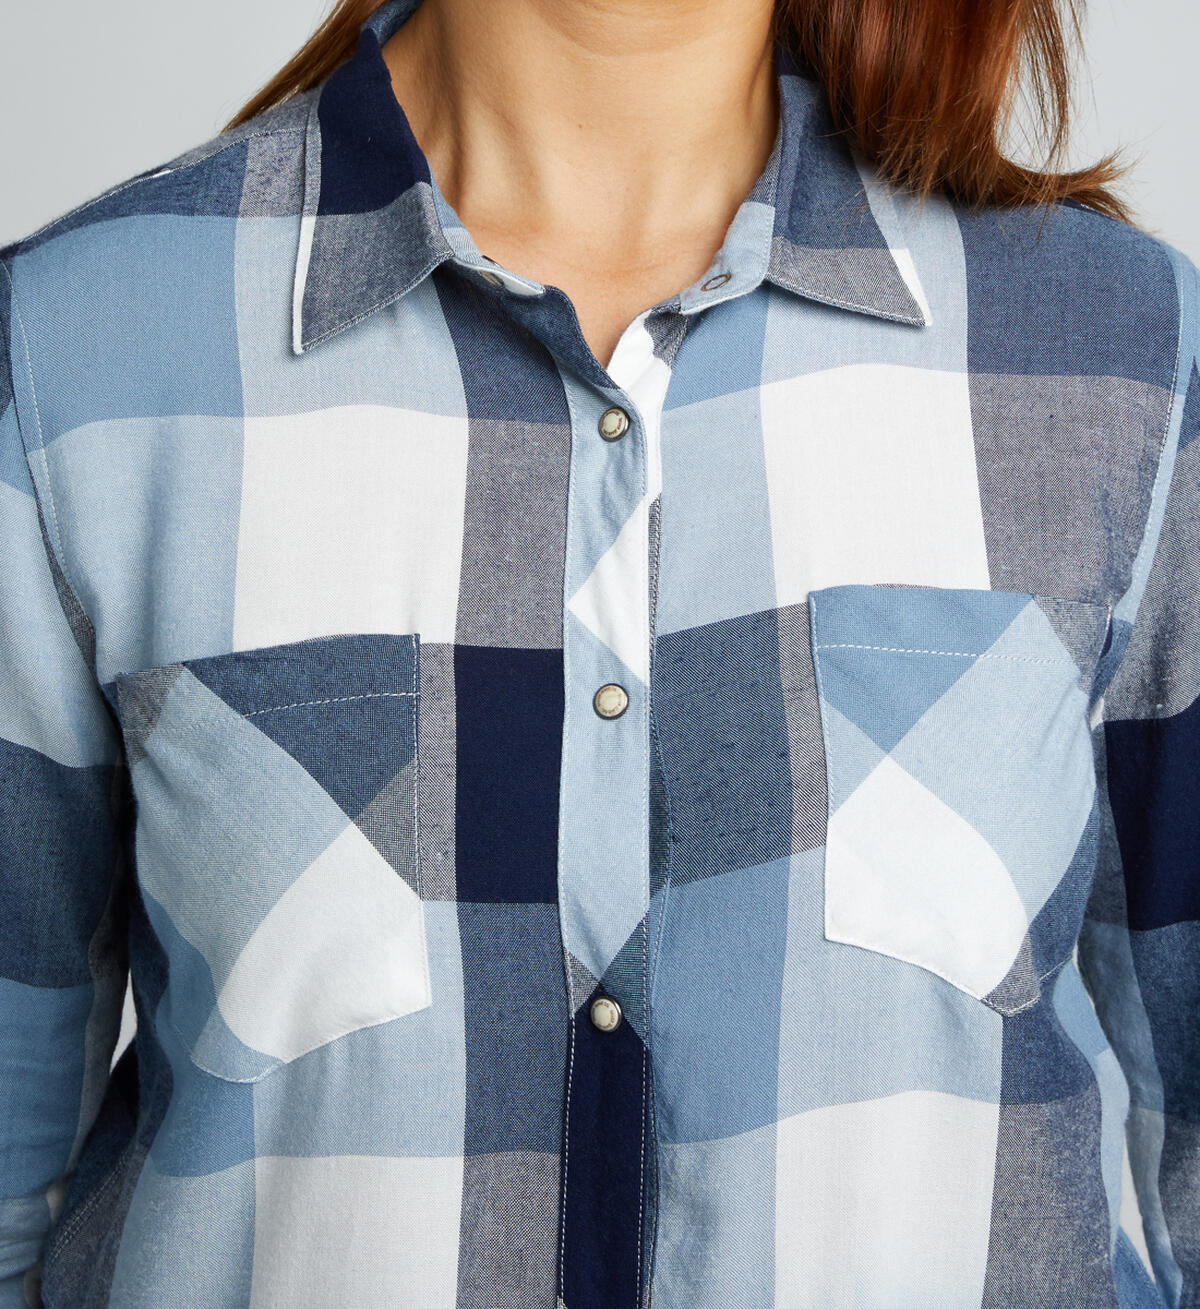 Vivian Long-Sleeve Plaid Shirt, , hi-res image number 3